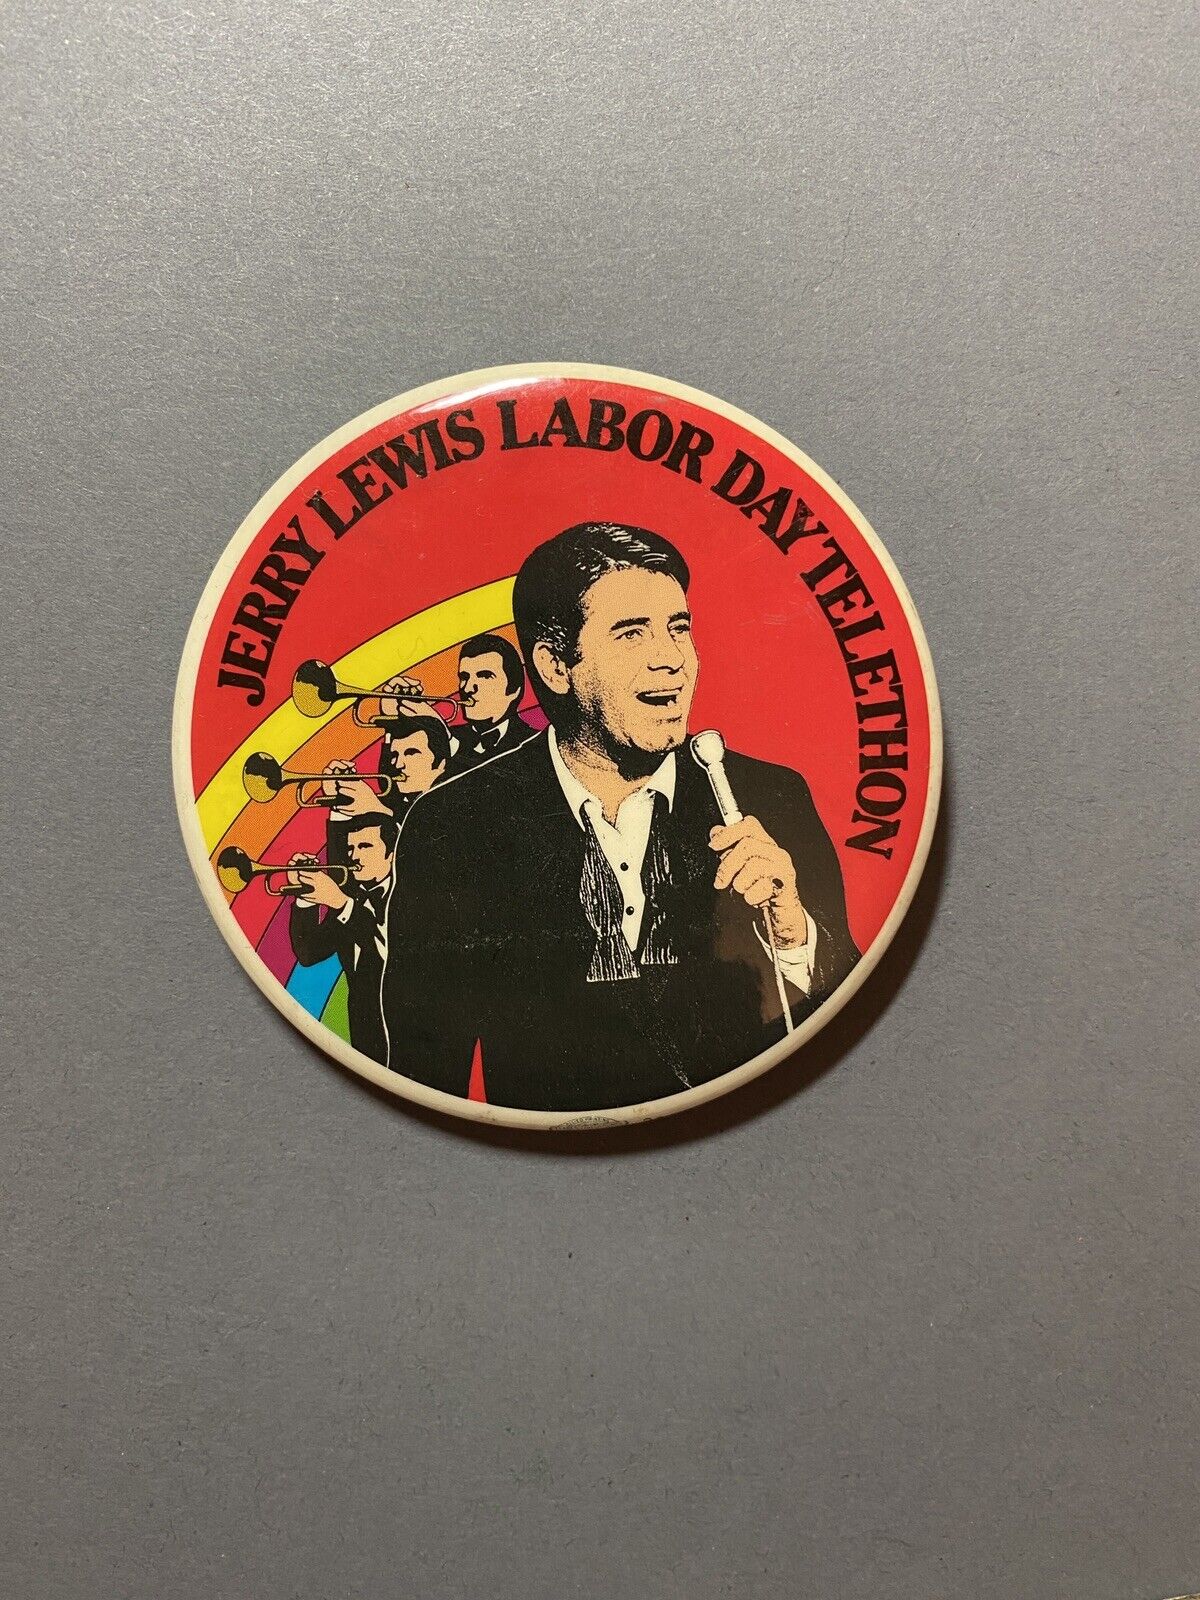 Vintage 1970s Jerry Lewis MDA Labor Day Telethon  pinback button